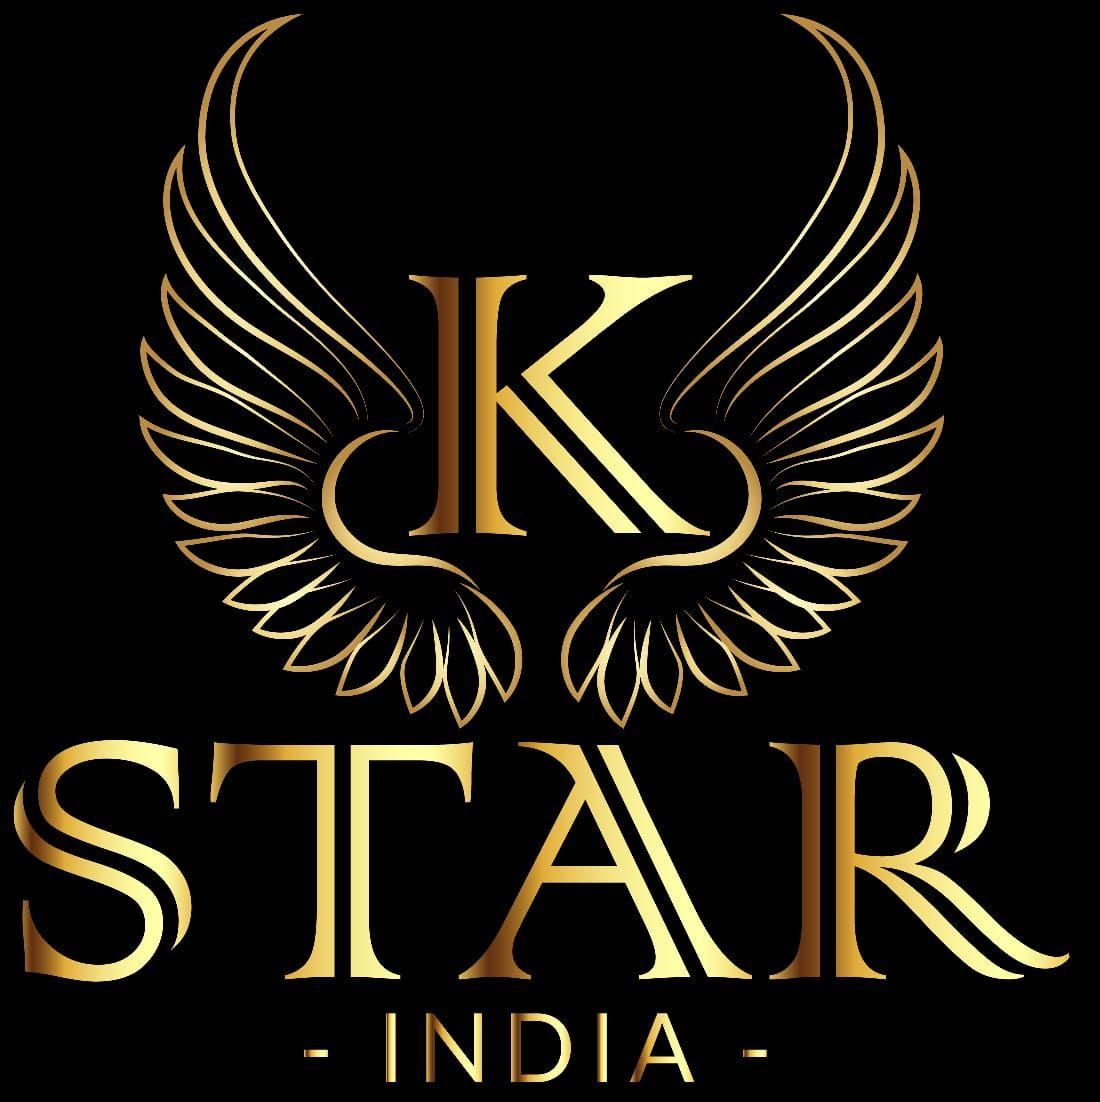 K STAR INDIA